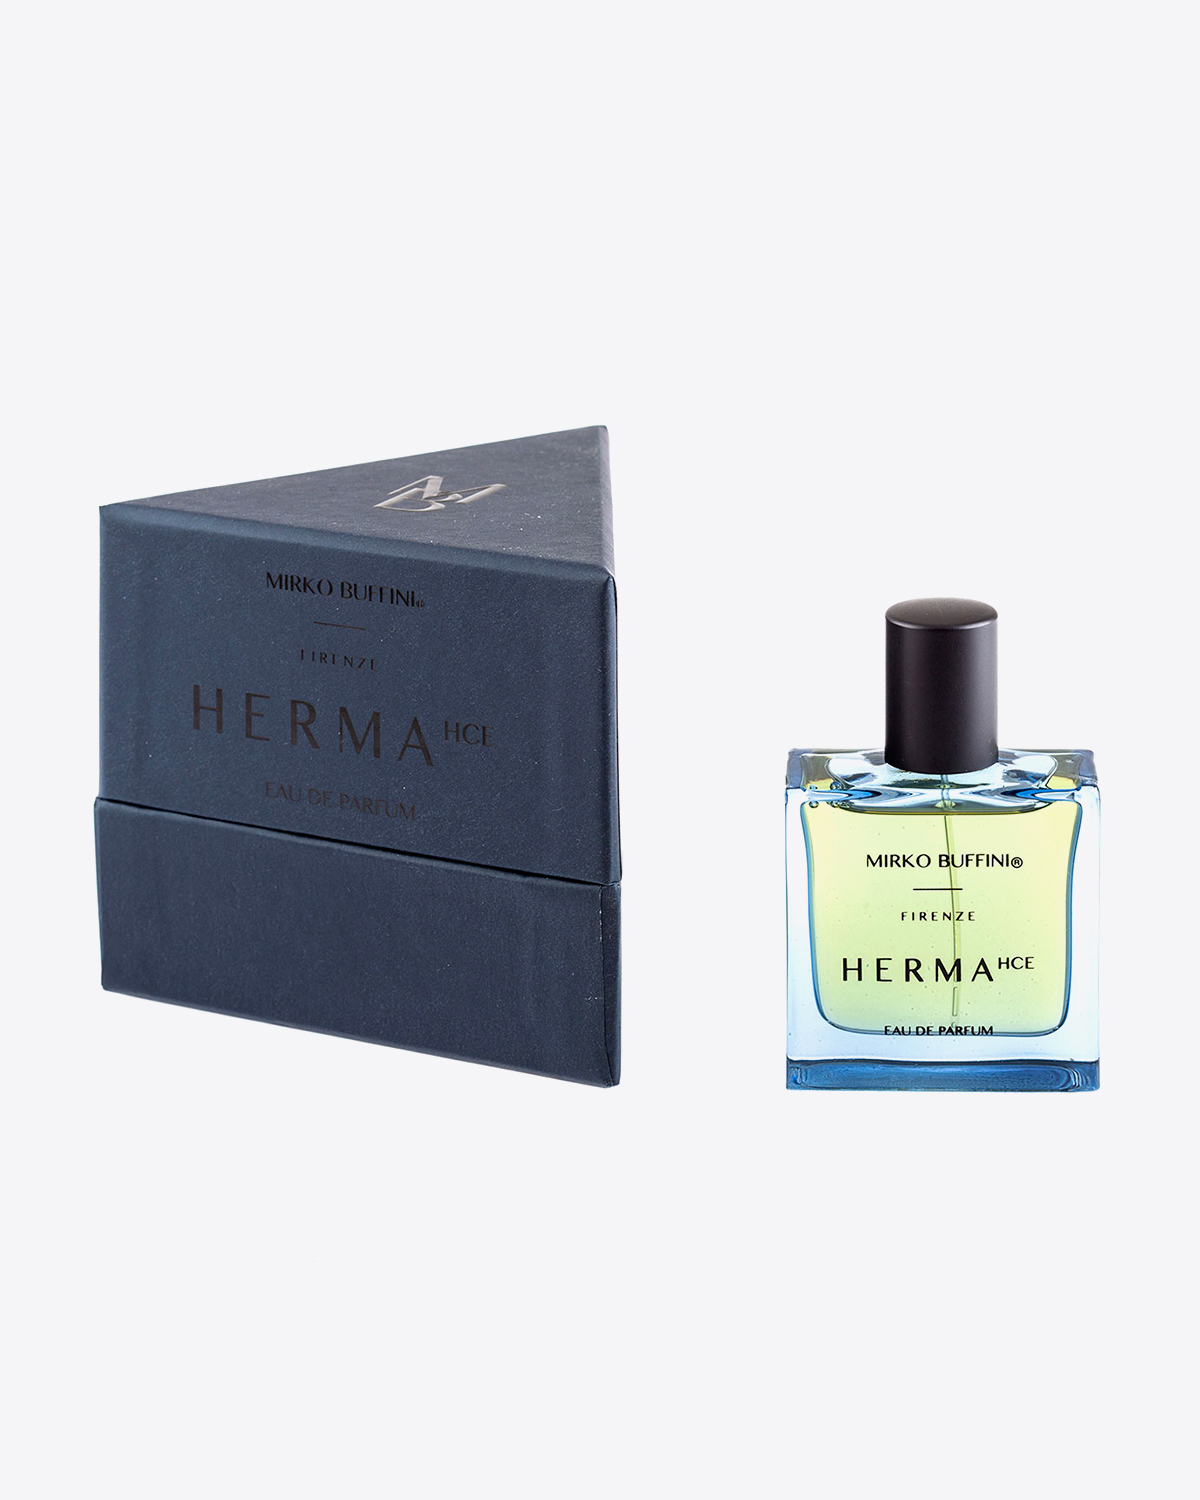 Parfum Herma Mirko Buffini. Flacon de 100 ml vendu dans sa boite triangulaire. Collection HCE.